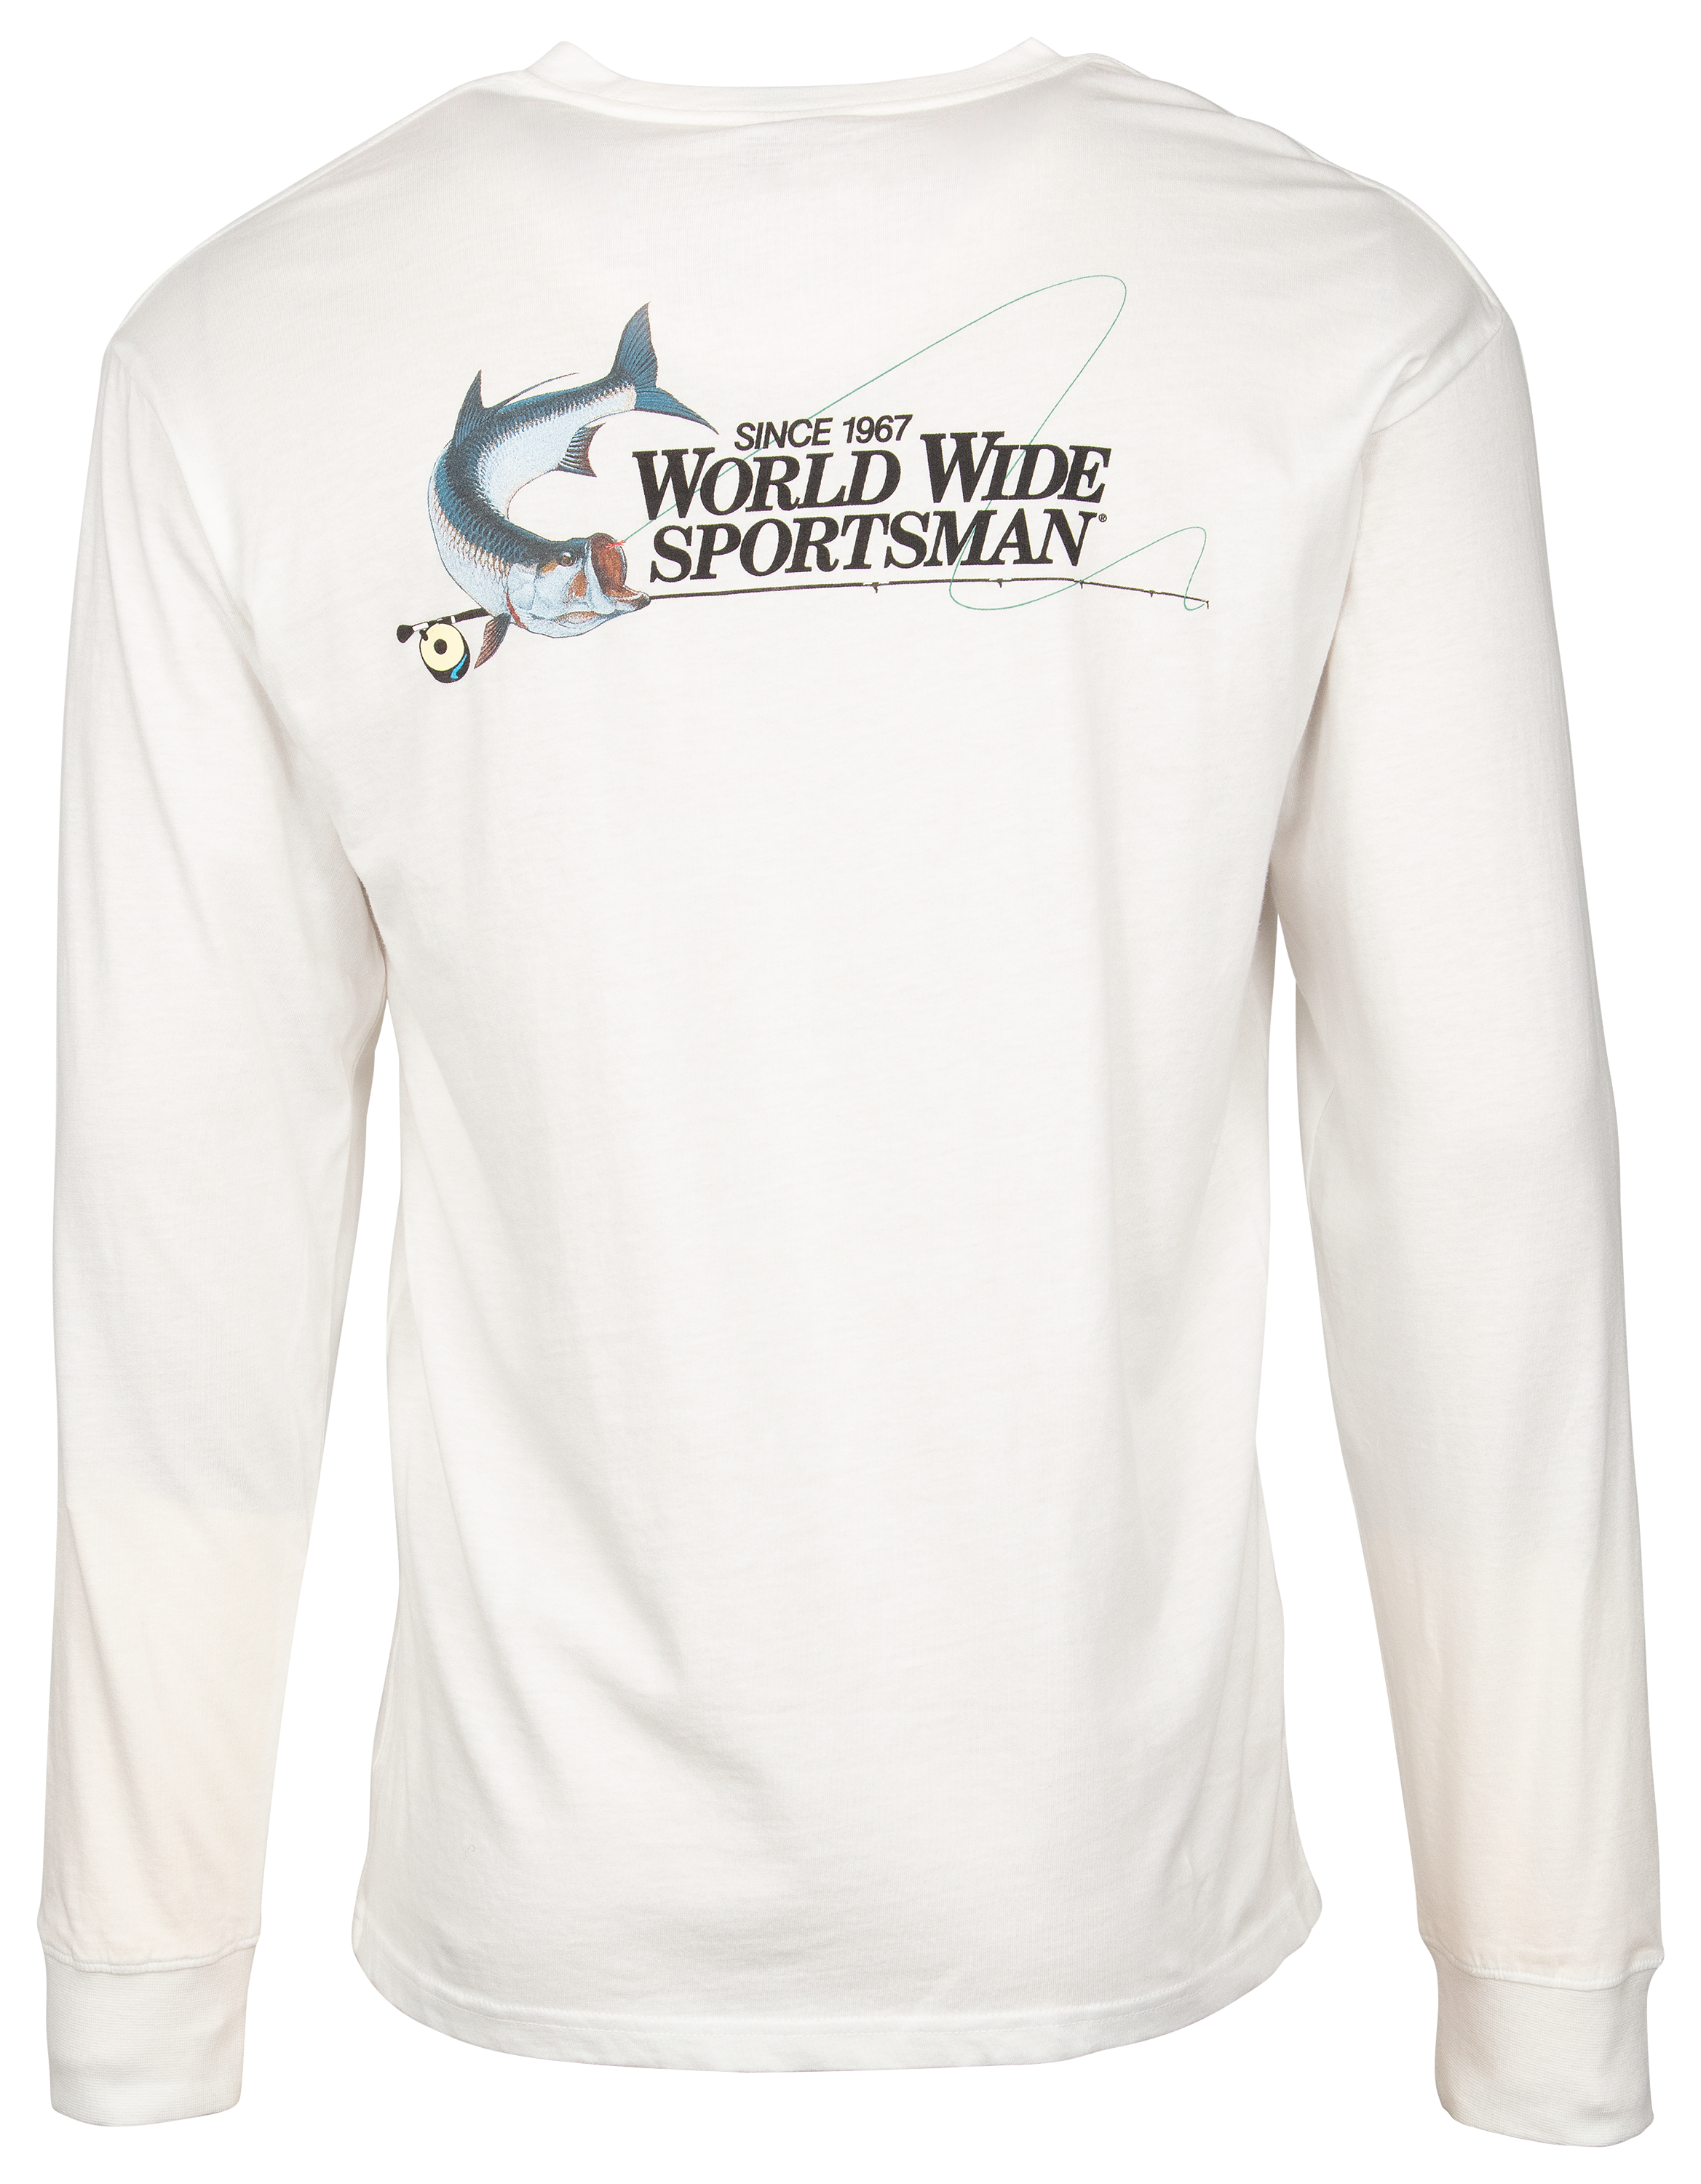 World Wide Sportsman Logo Graphic Long-Sleeve T-Shirt for Men - Heather Gray - XL